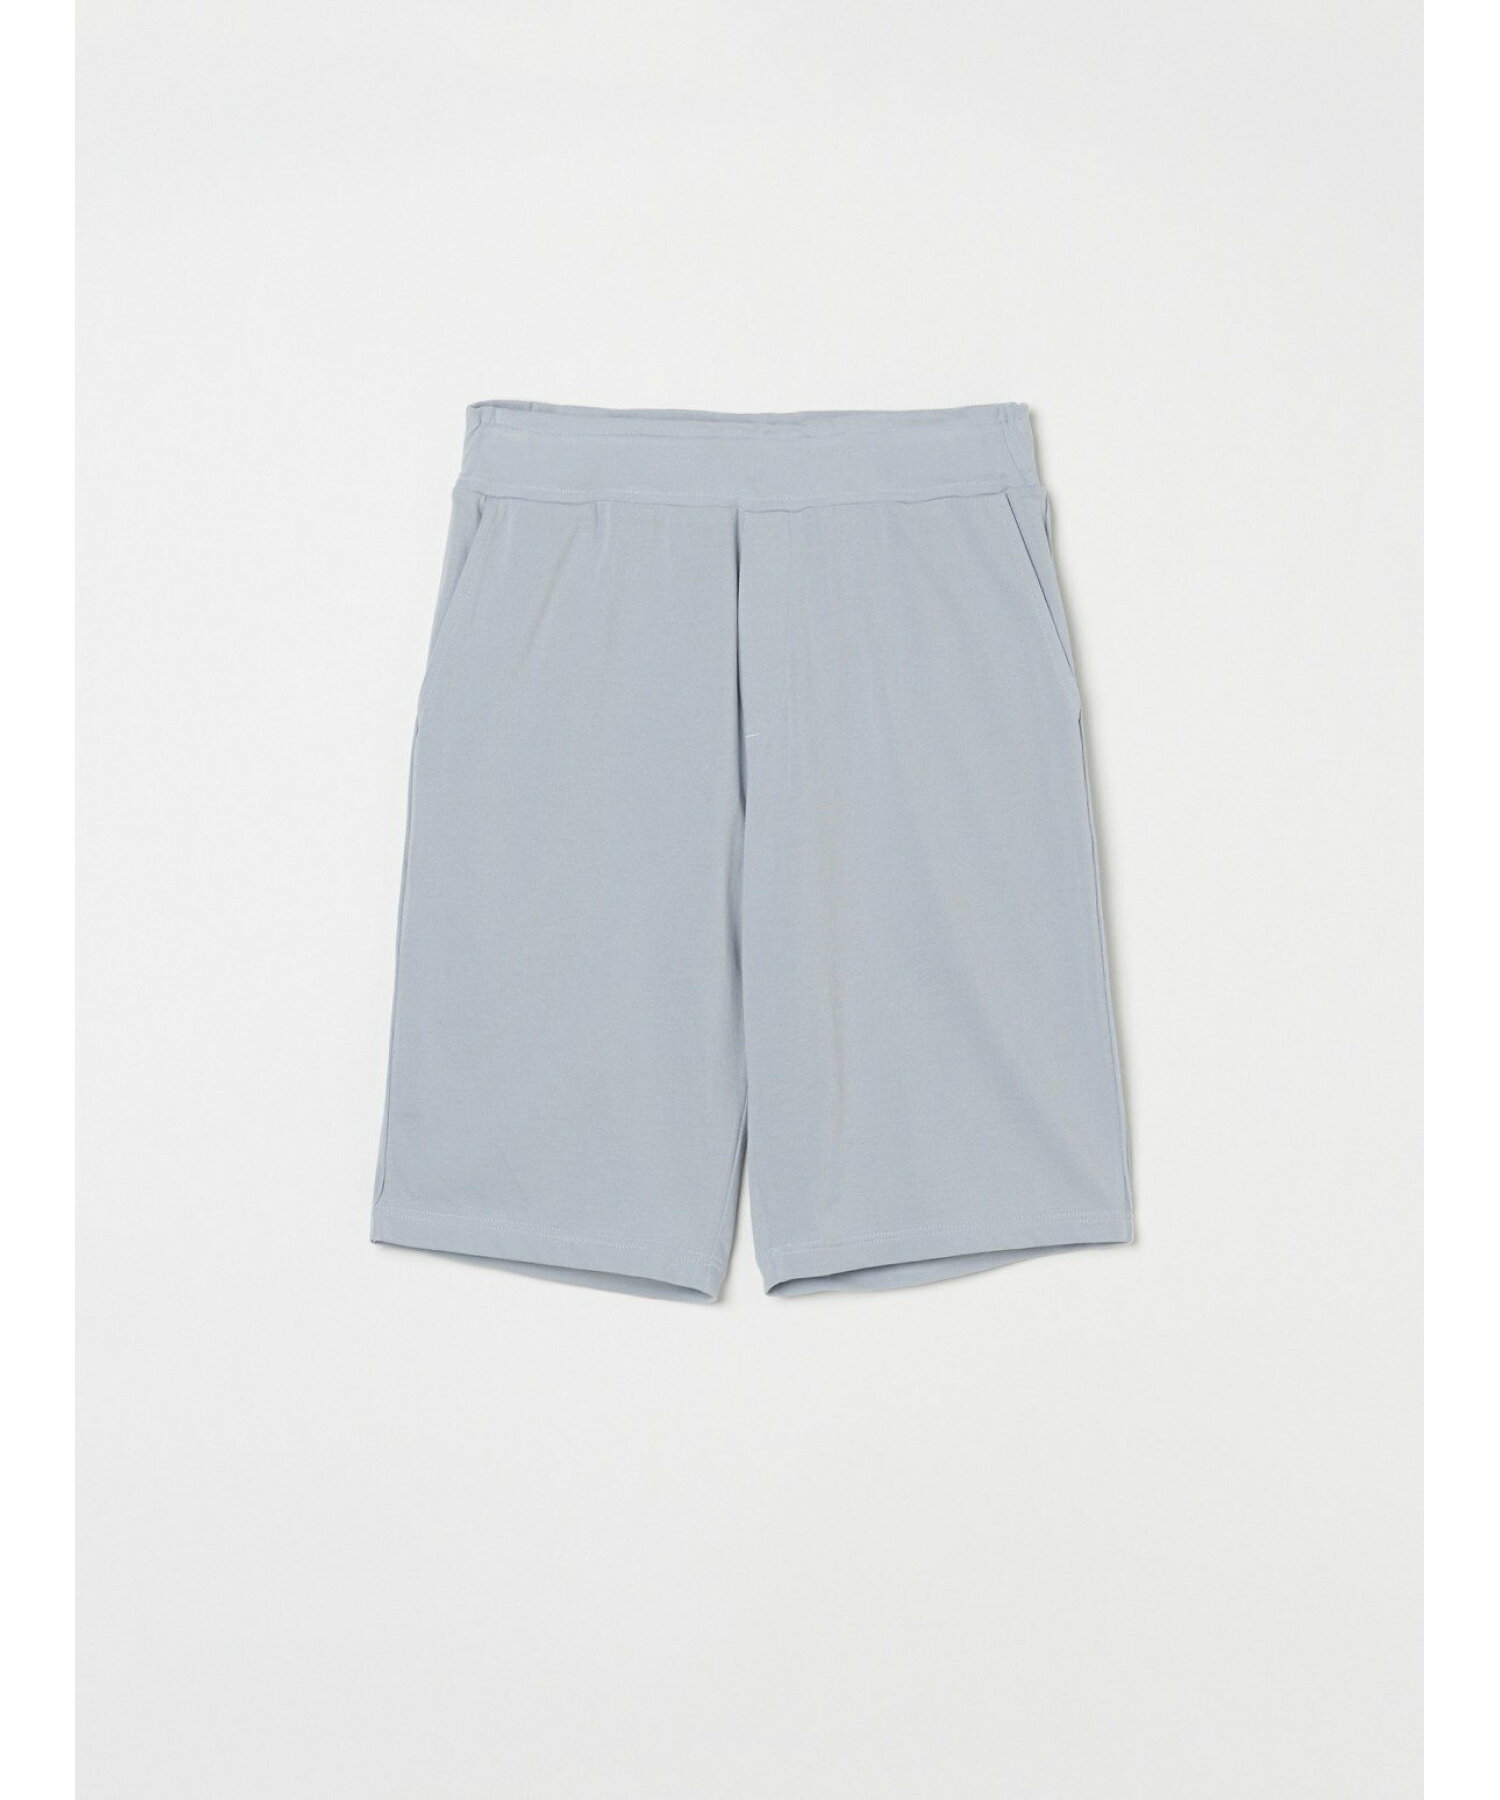 Men's gauze french terry shorts